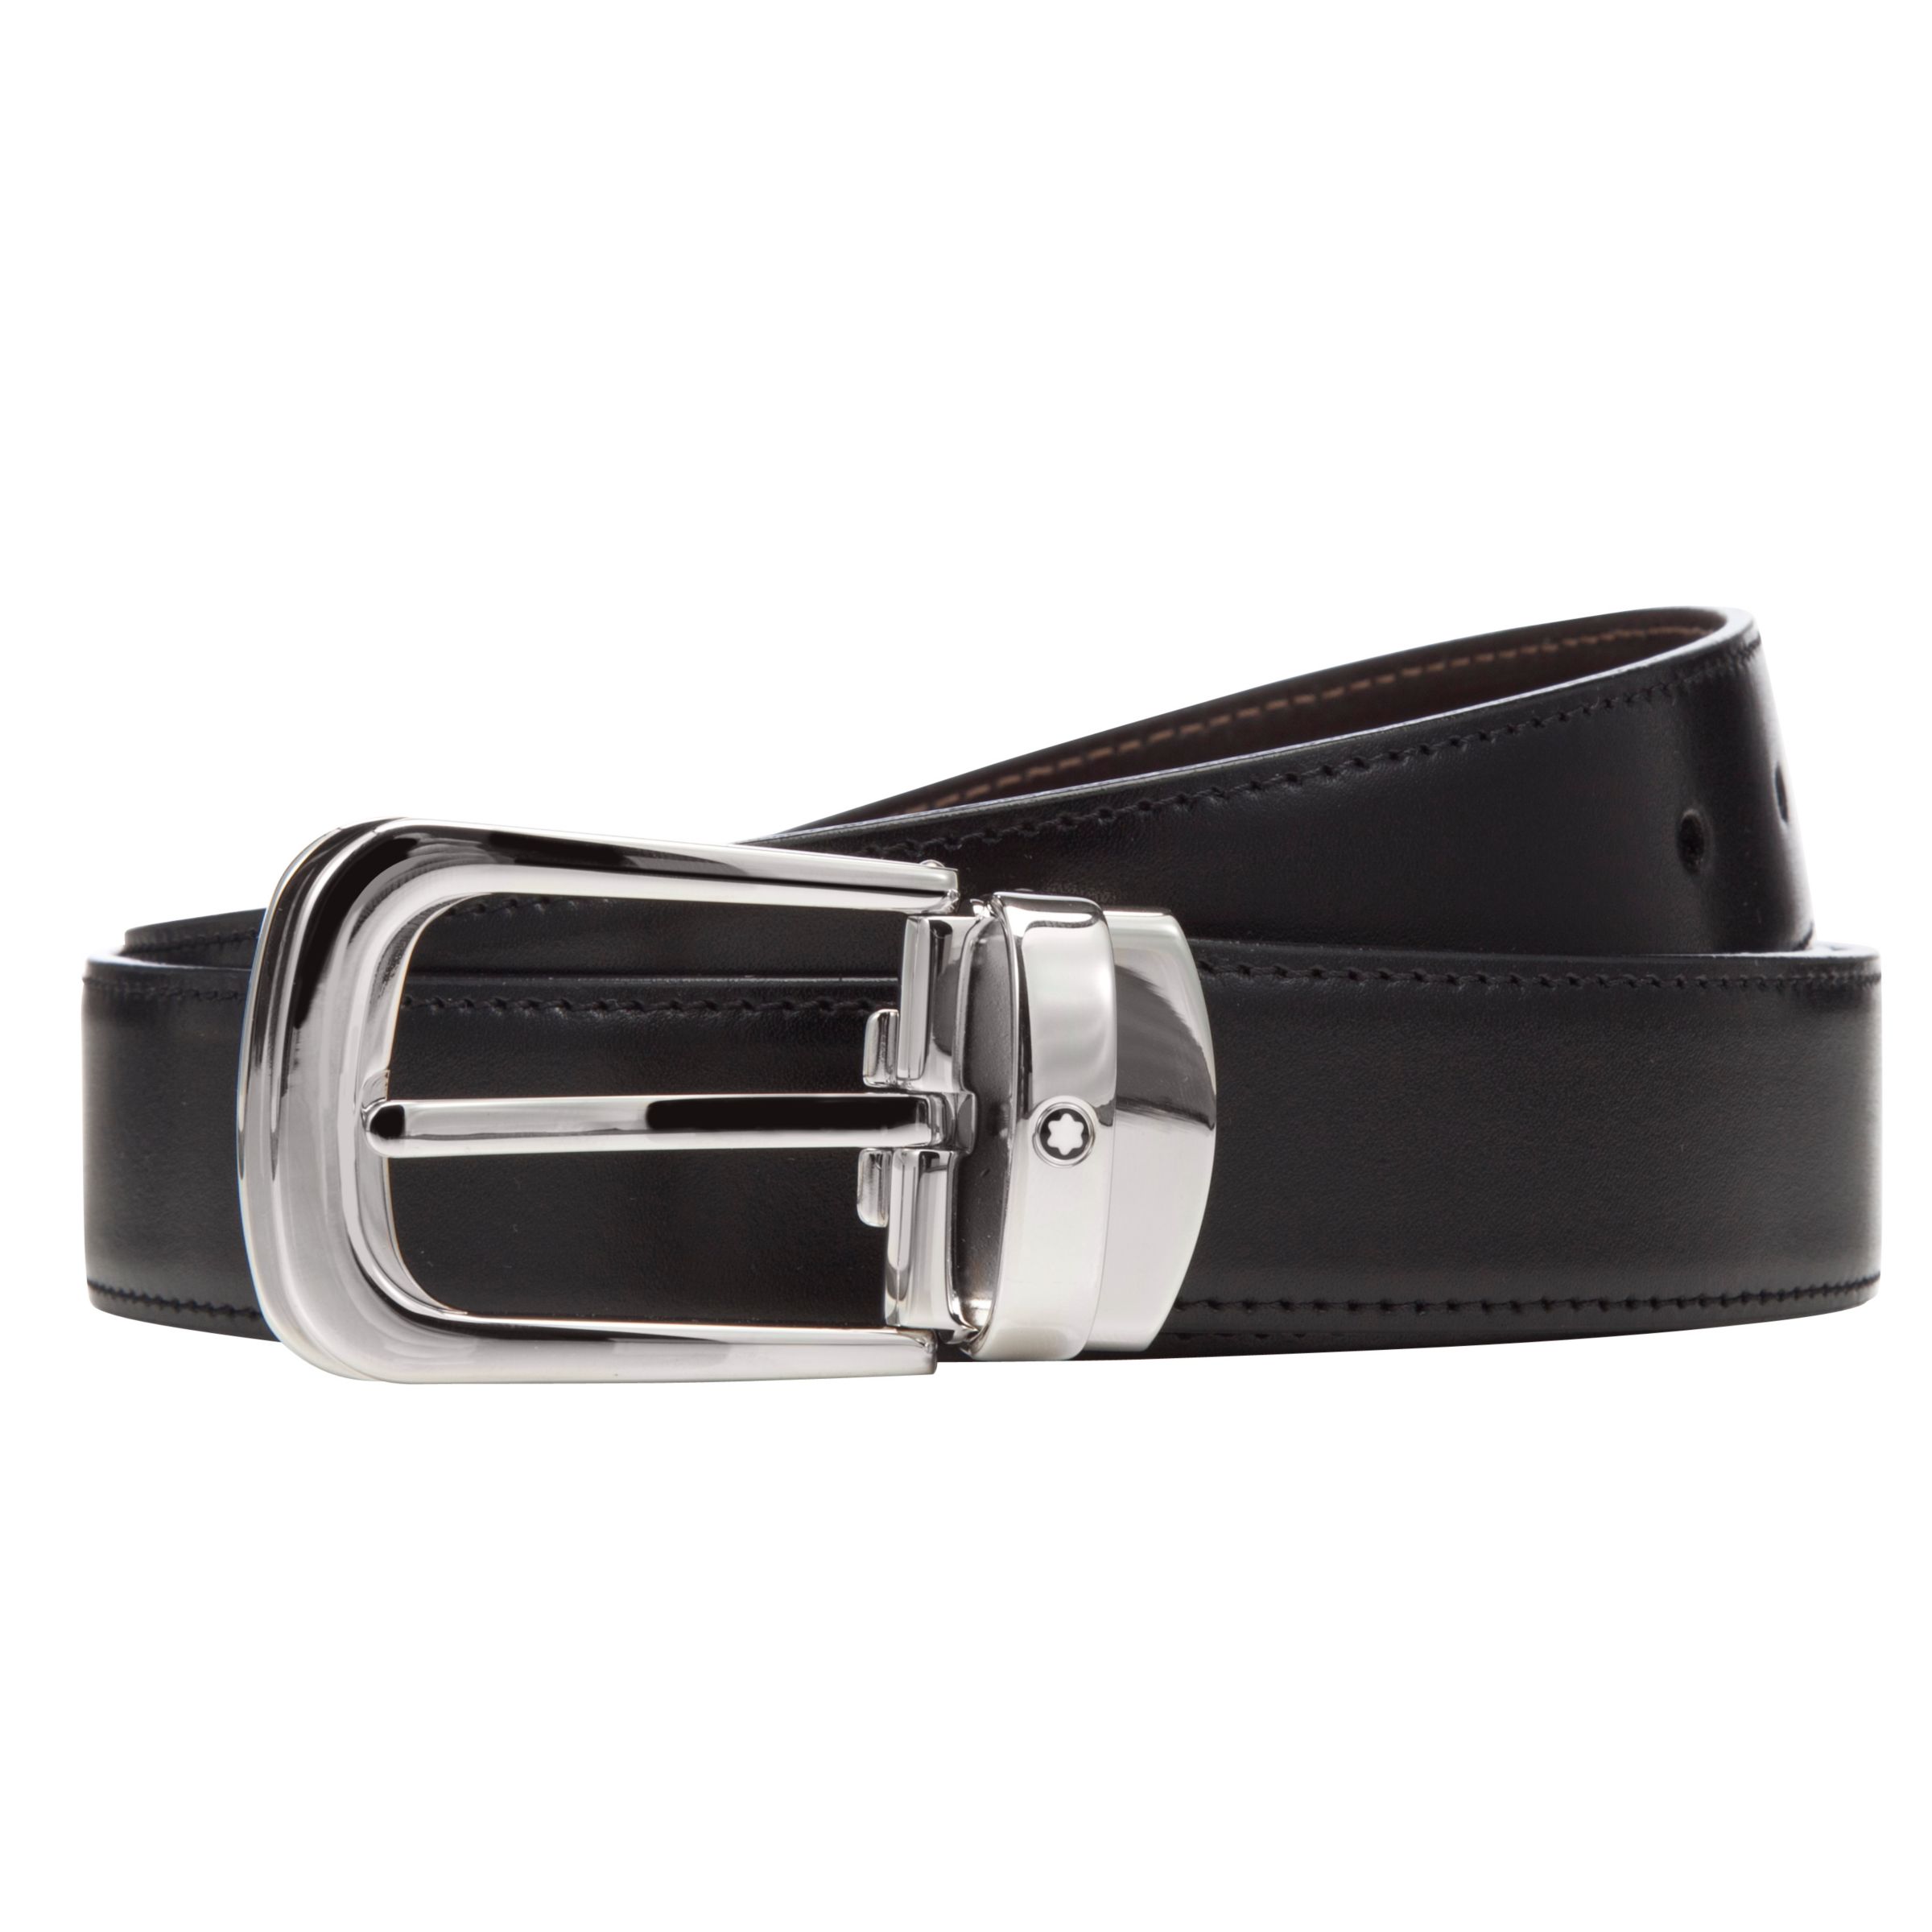 Montblanc Reversible Leather Belt With Palladium Horseshoe Buckle, One Size, Black/Brown